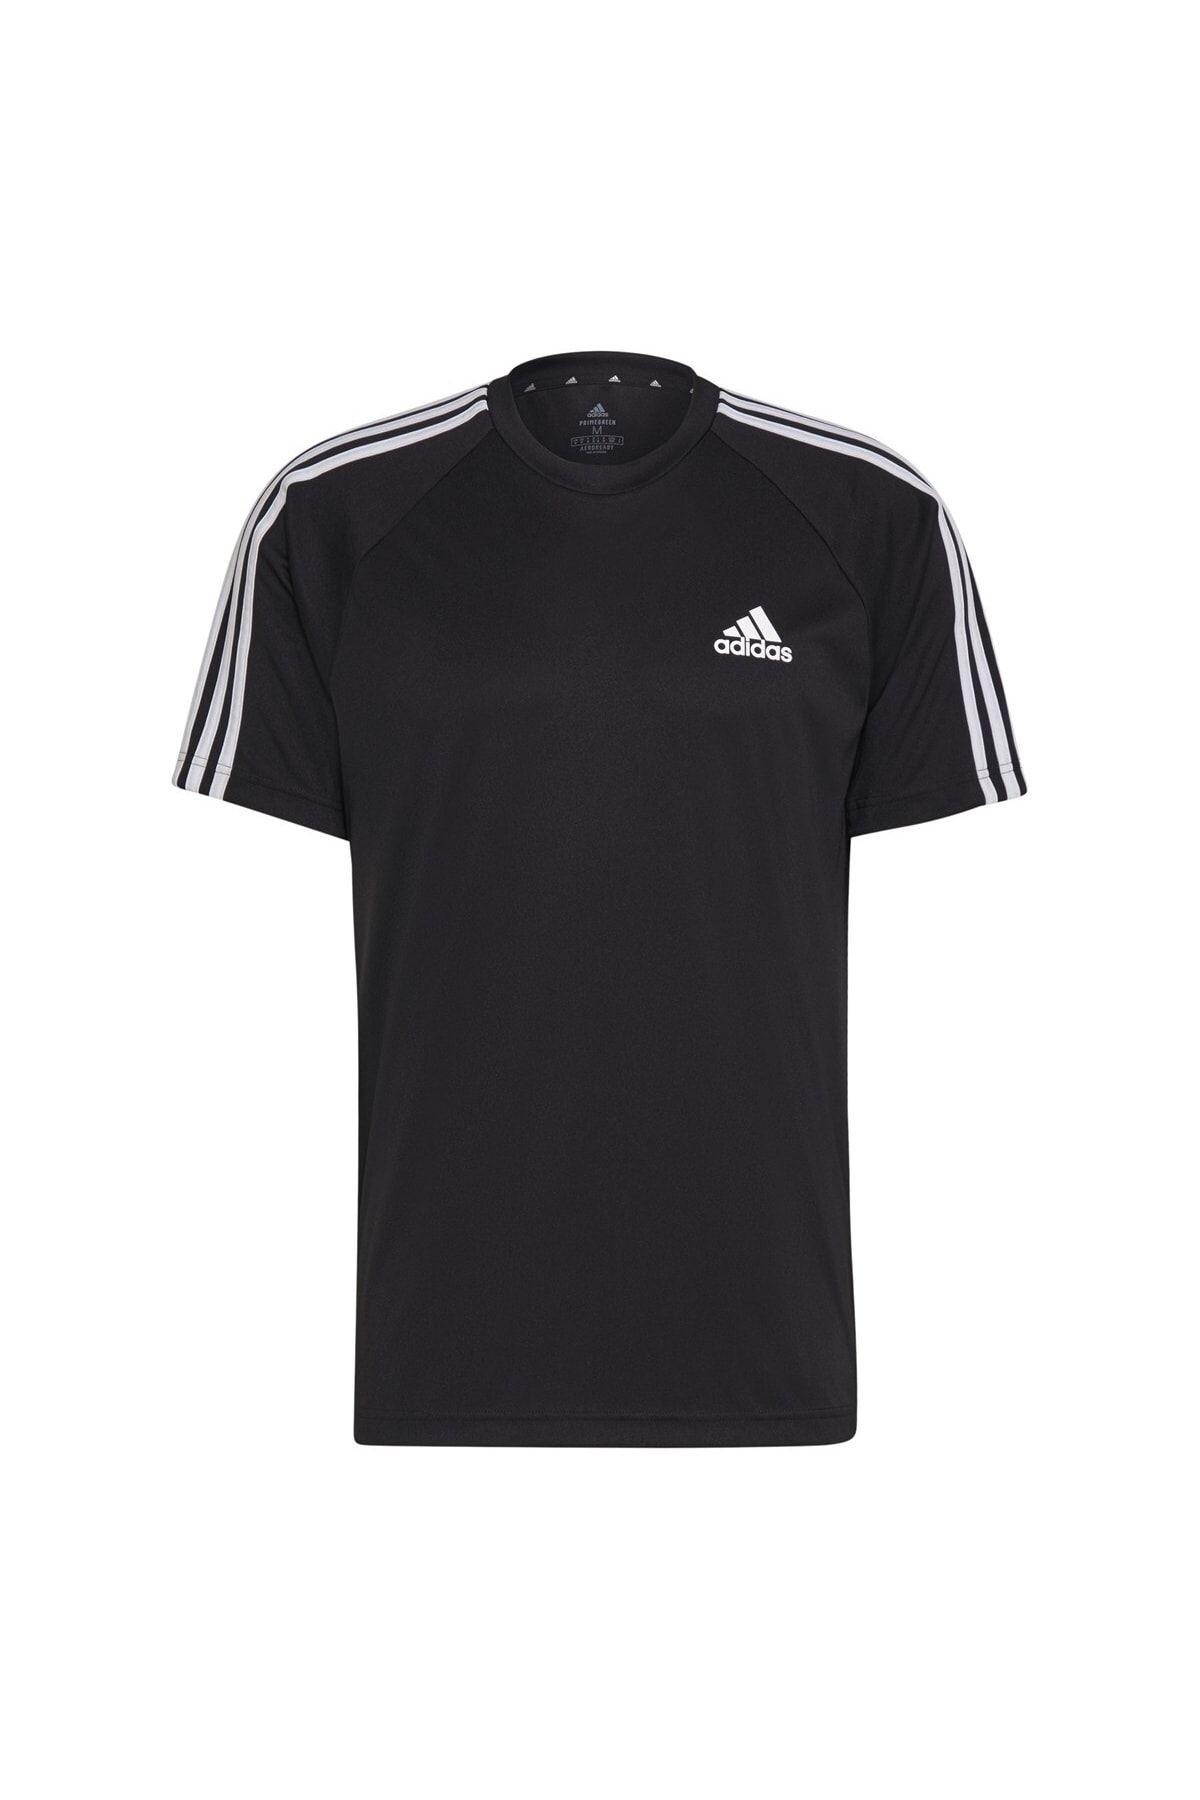 adidas Sports T-Shirt - Black Trendyol 